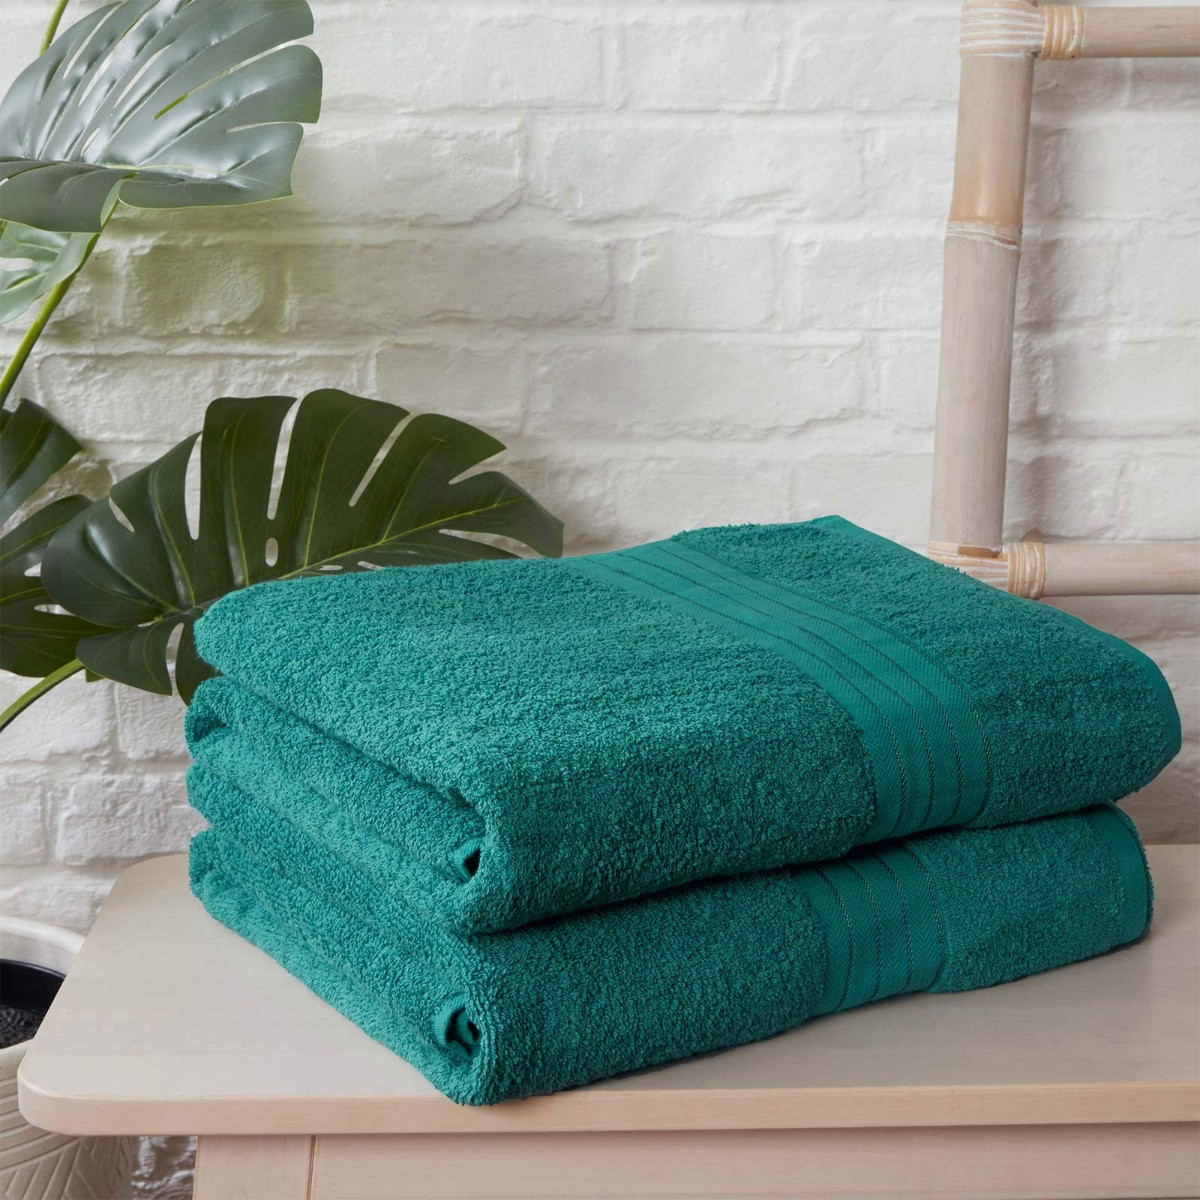 Luxury 100% Cotton 2 Jumbo Bath Sheets Large Towels Bale - Teal>